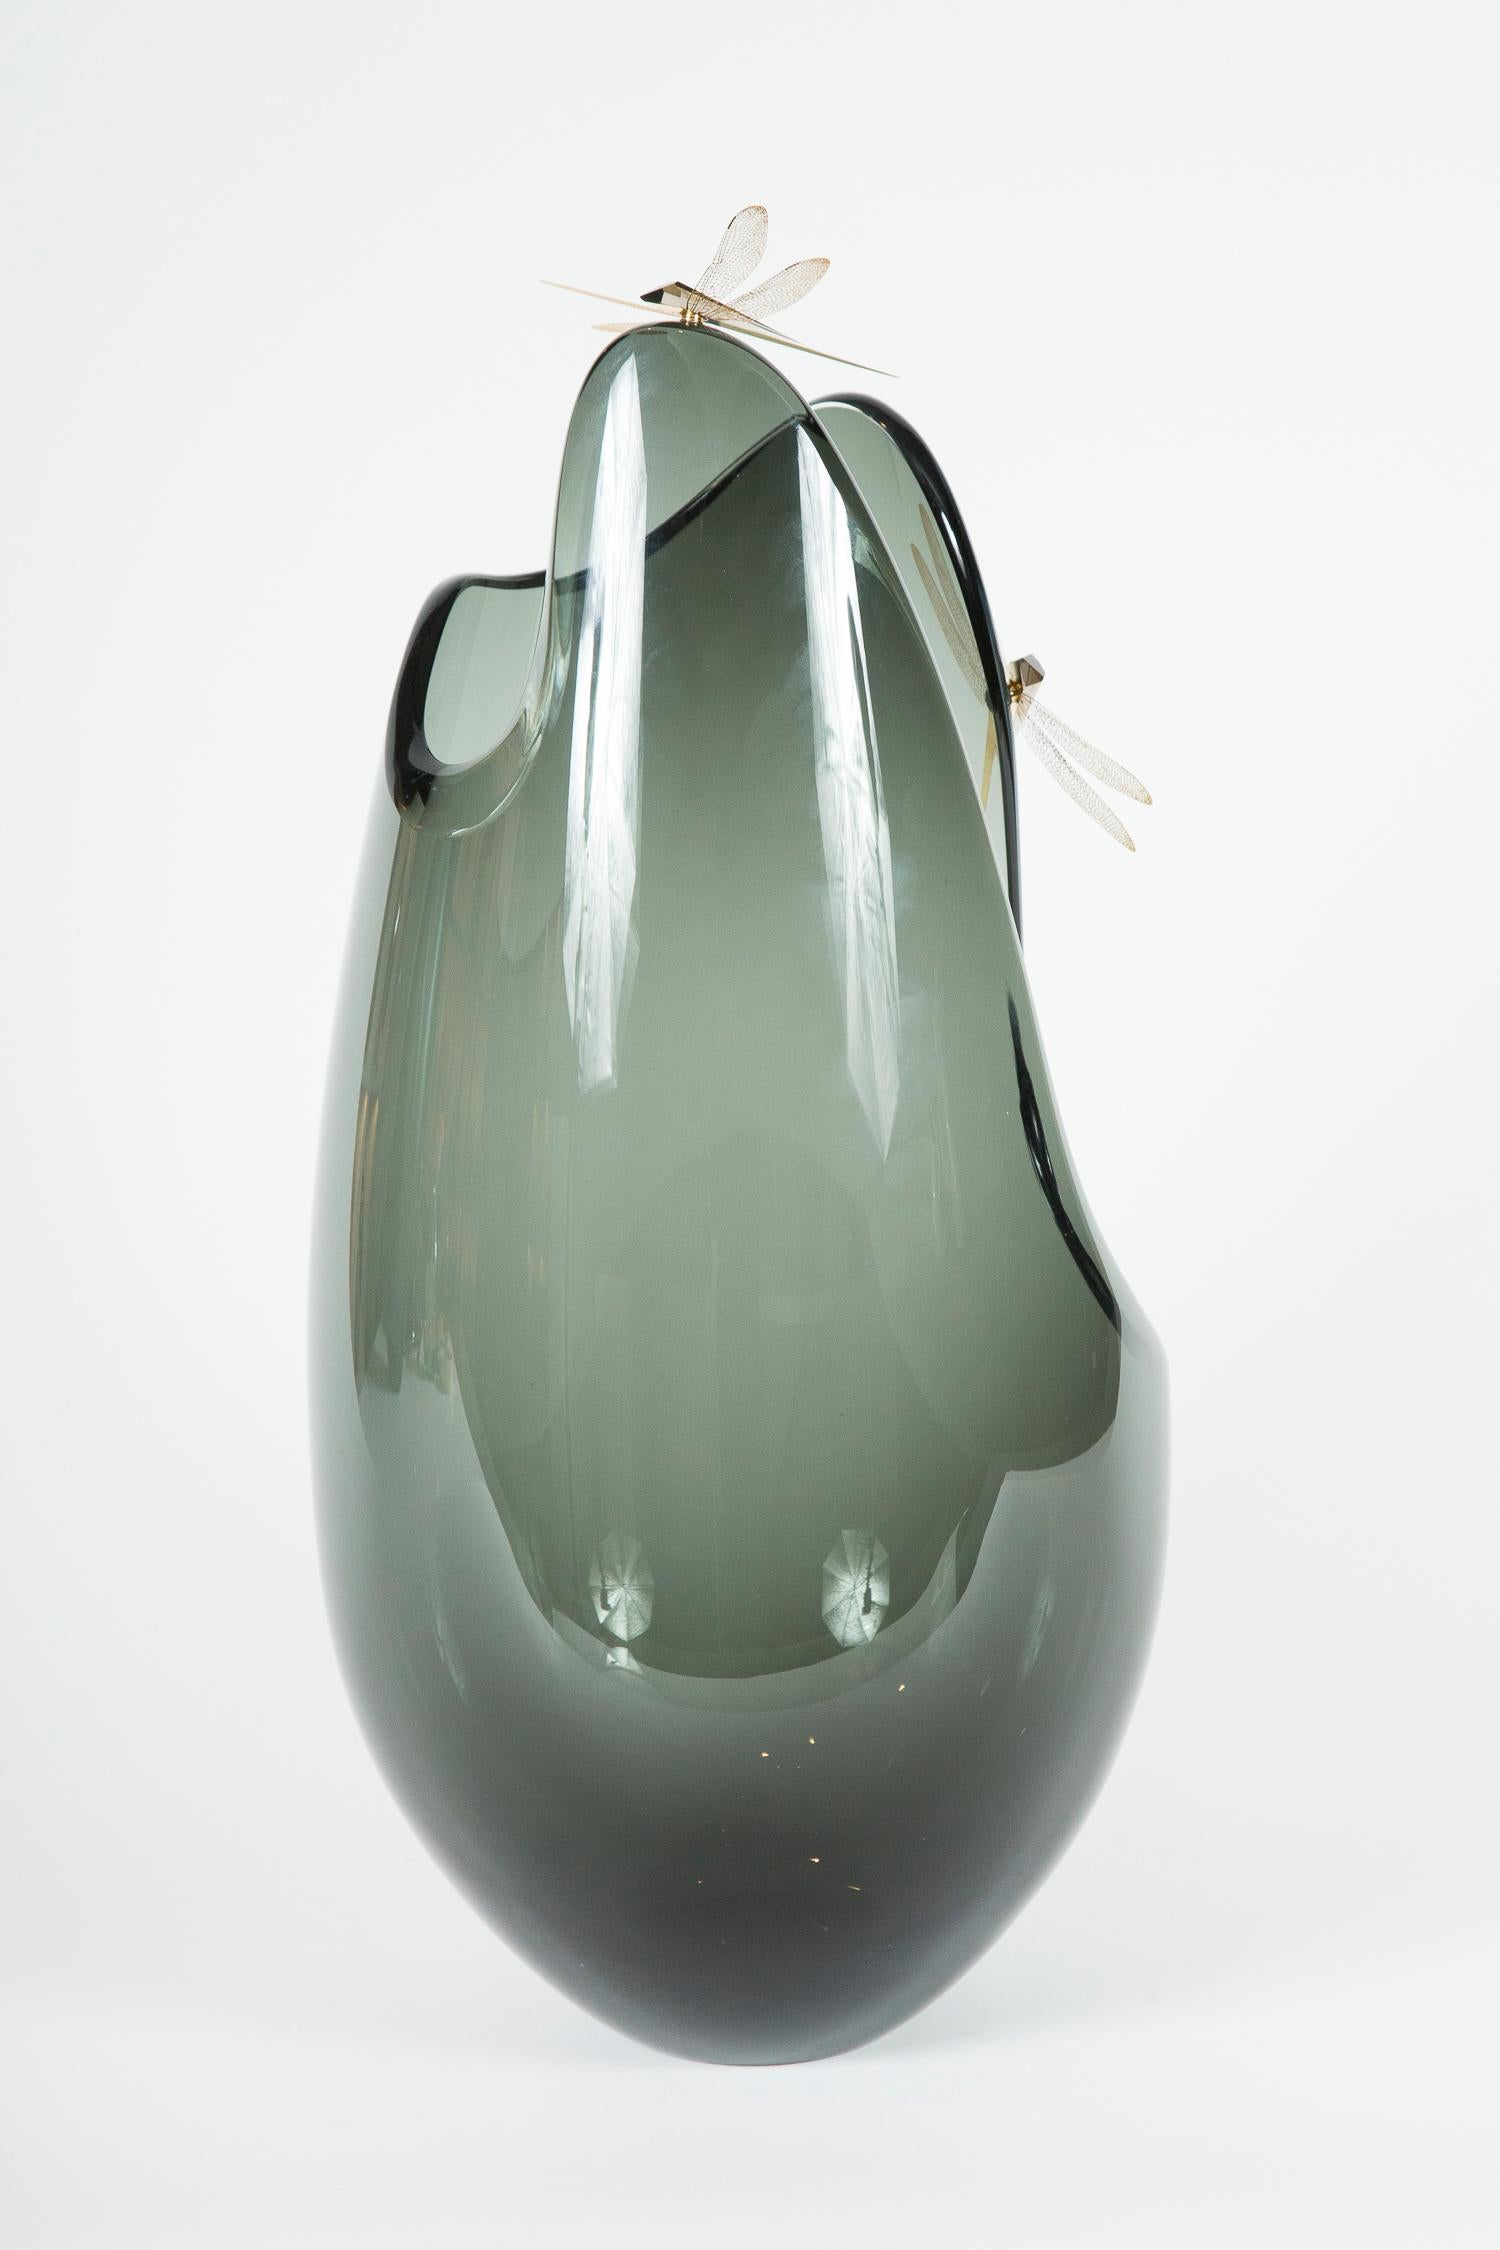 British Fen III, a unique smokey grey glass sculpture with dragonflies by Hanne Enemark